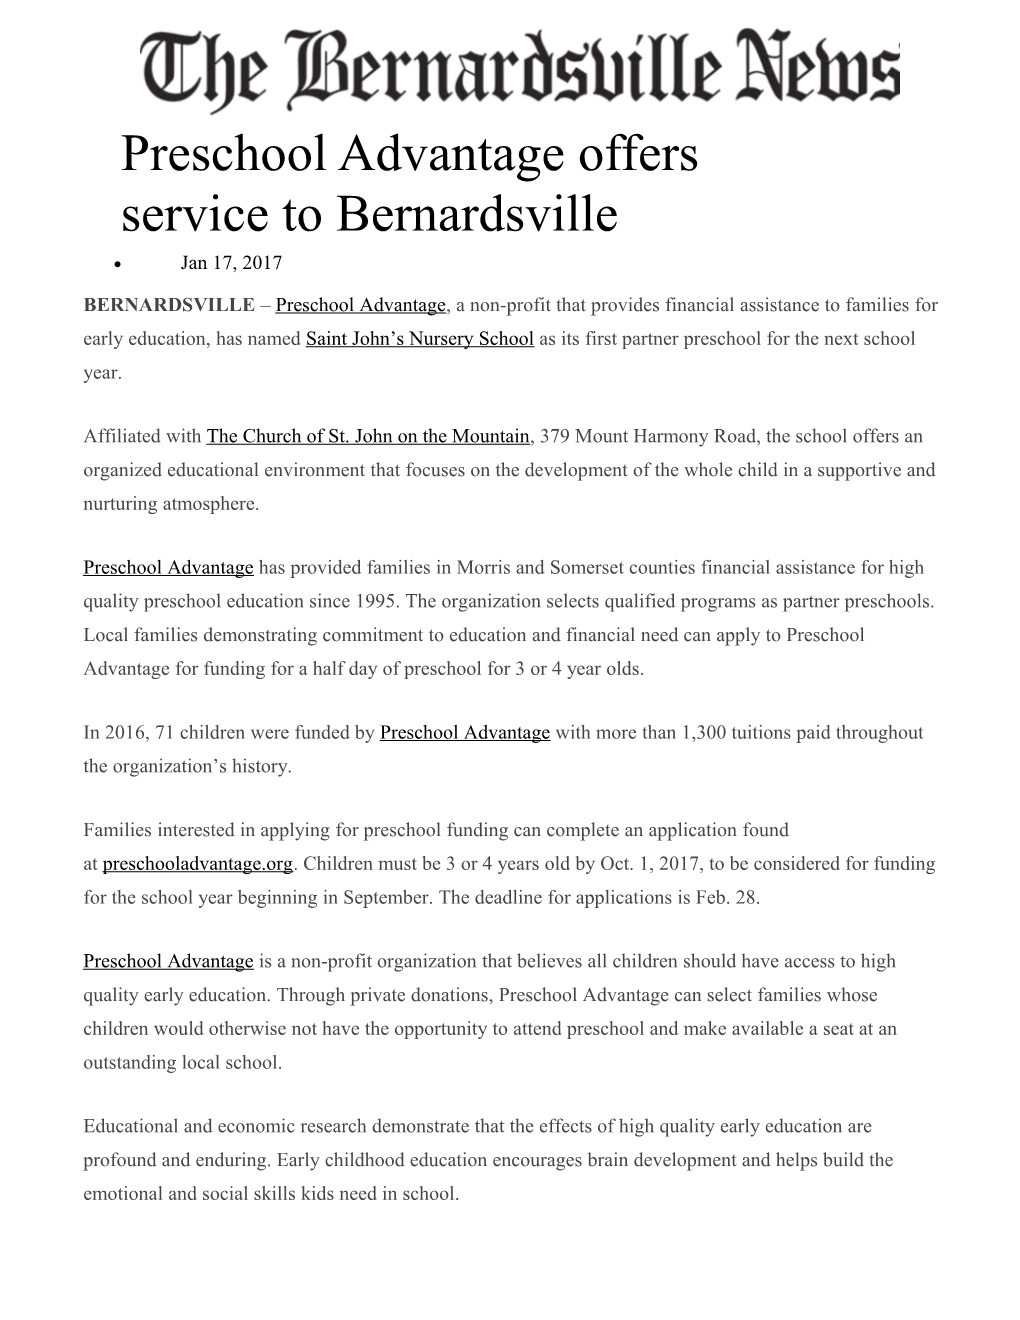 Preschool Advantage Offers Service to Bernardsville